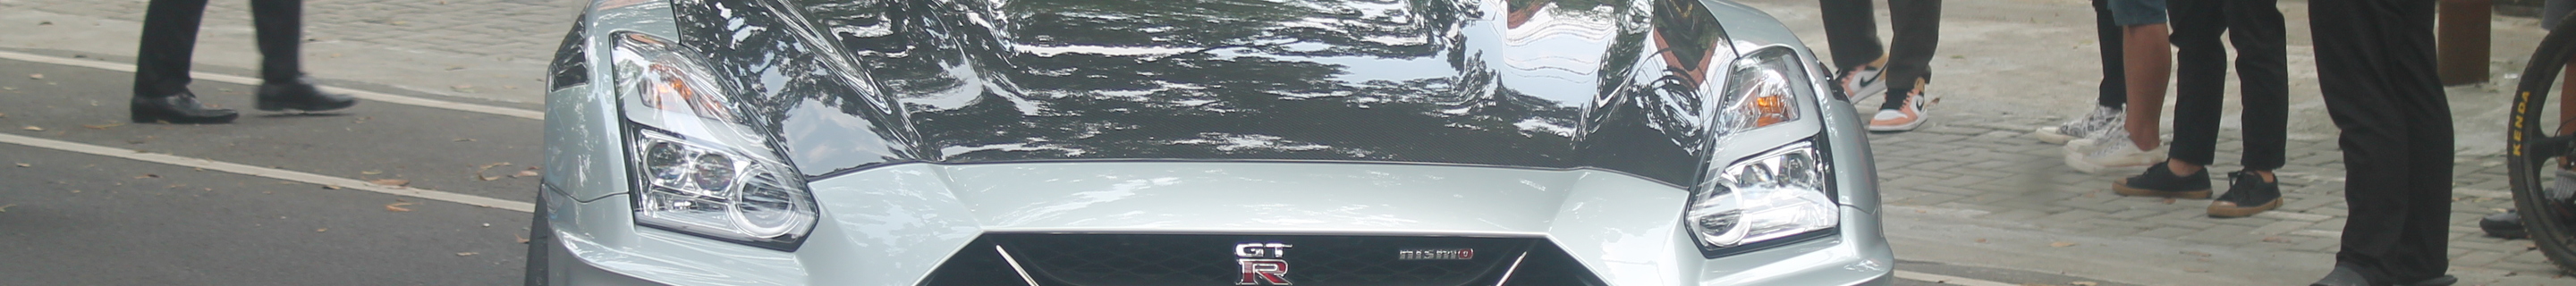 Nissan GT-R 2022 Nismo Special Edition